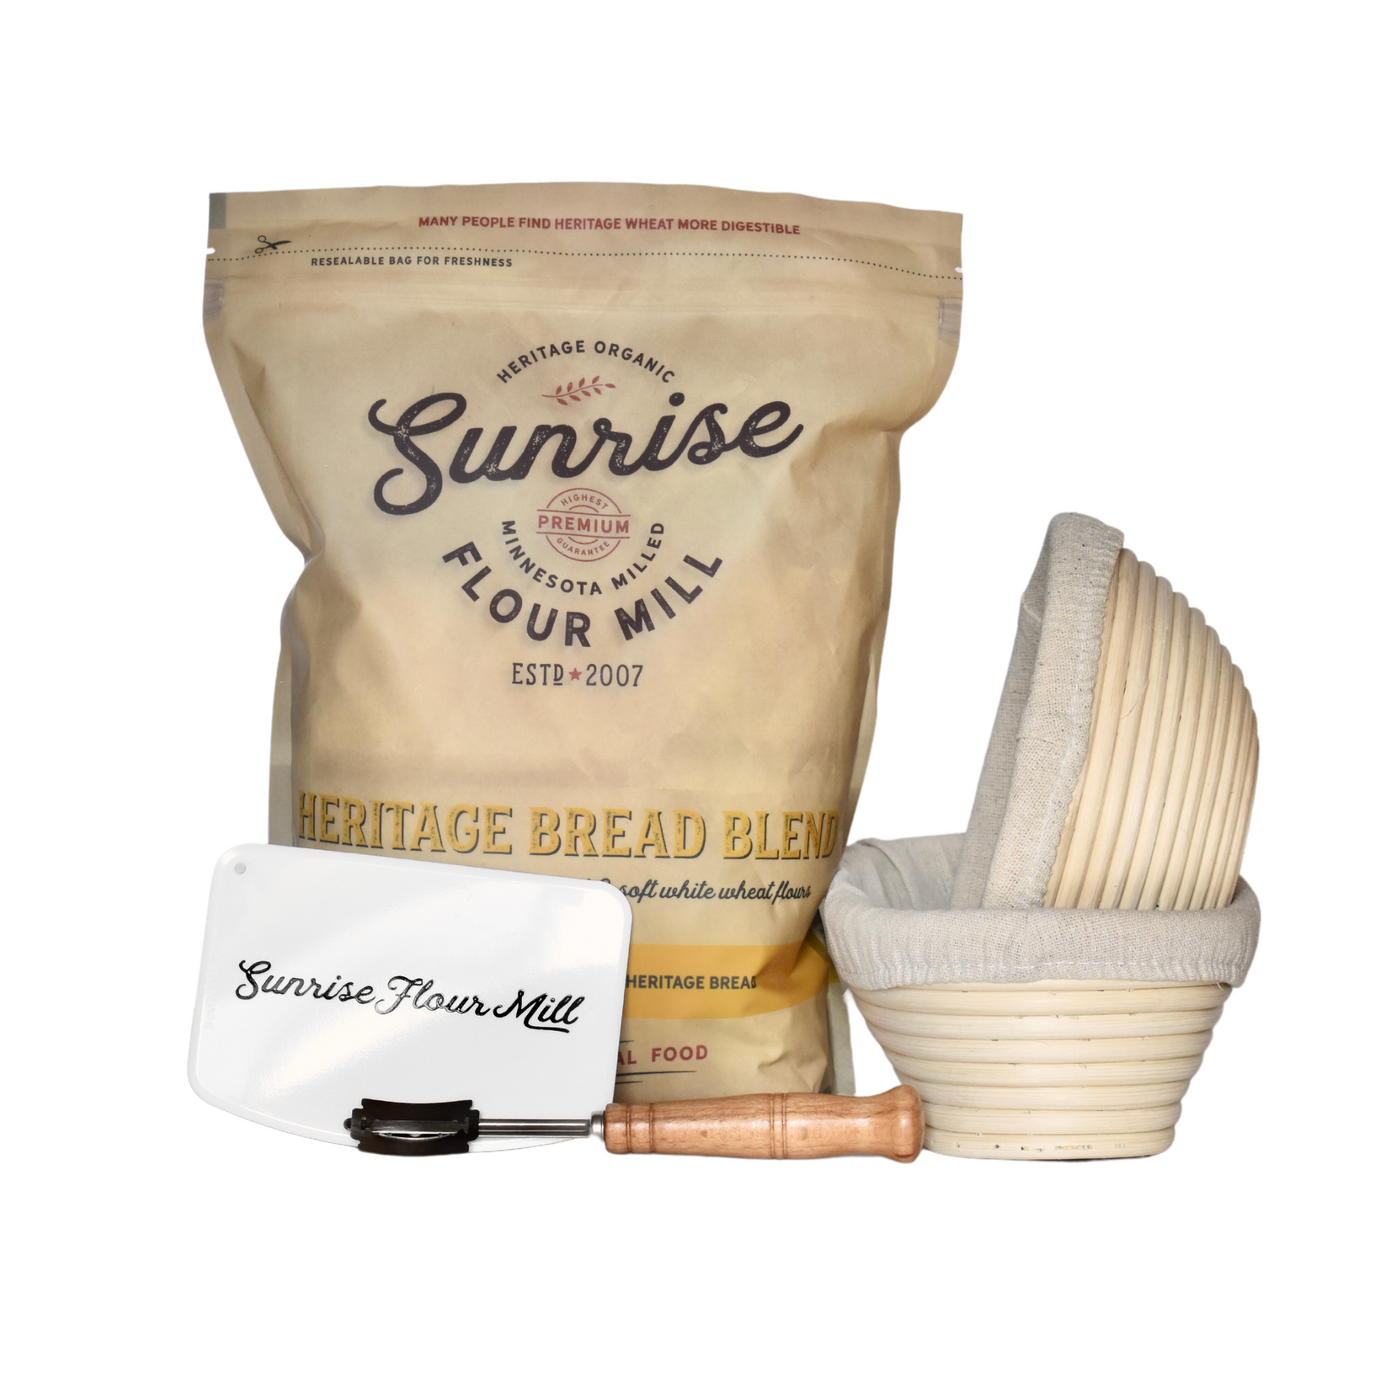 Bread Kit